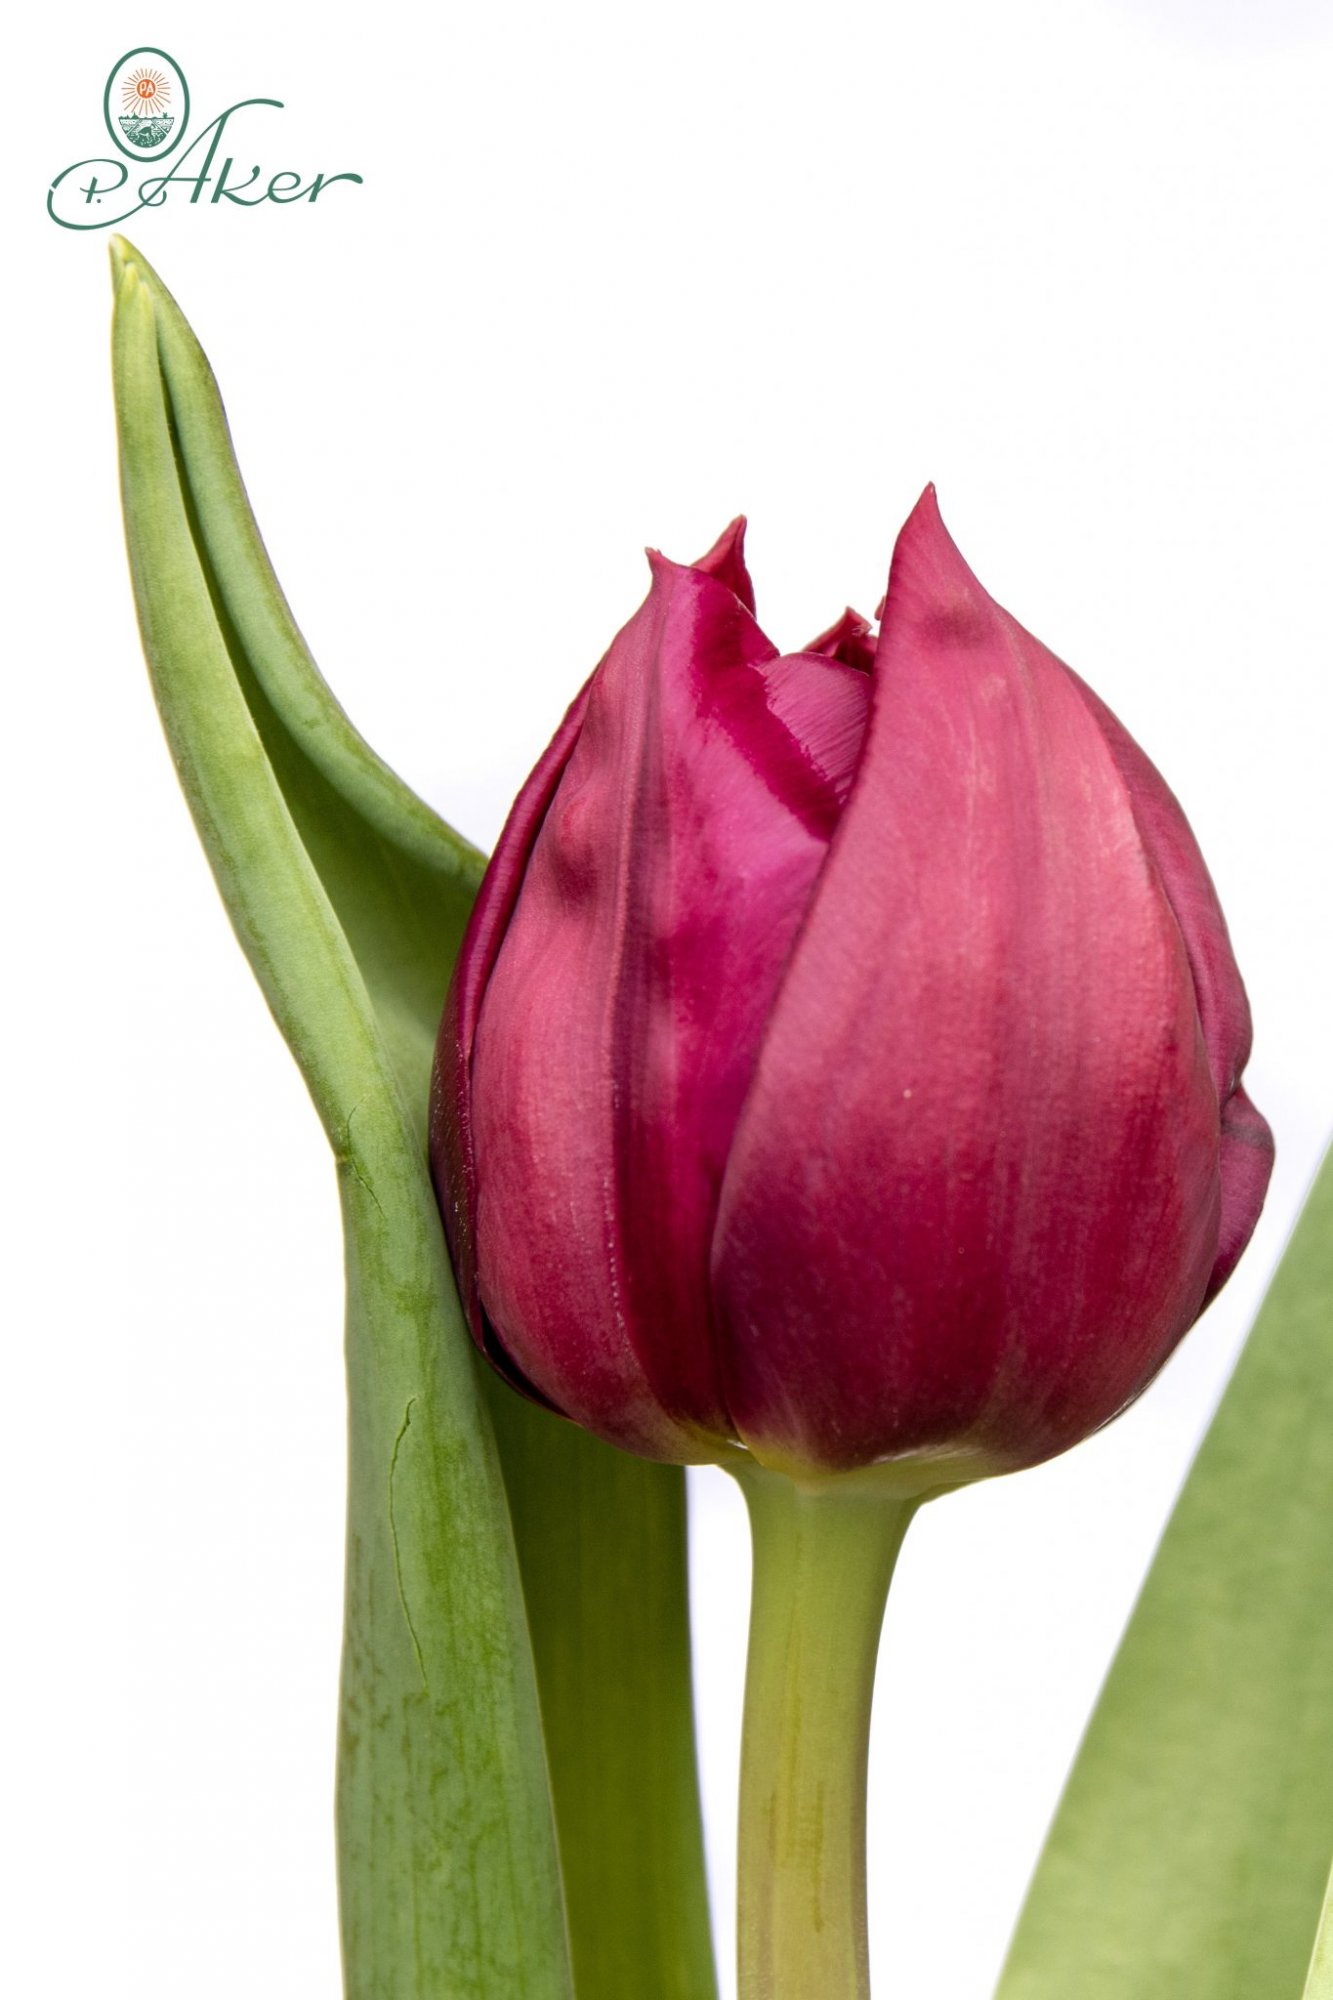 Pontiac - Double Early Tulip - P. Aker Flower bulbs and Seeds